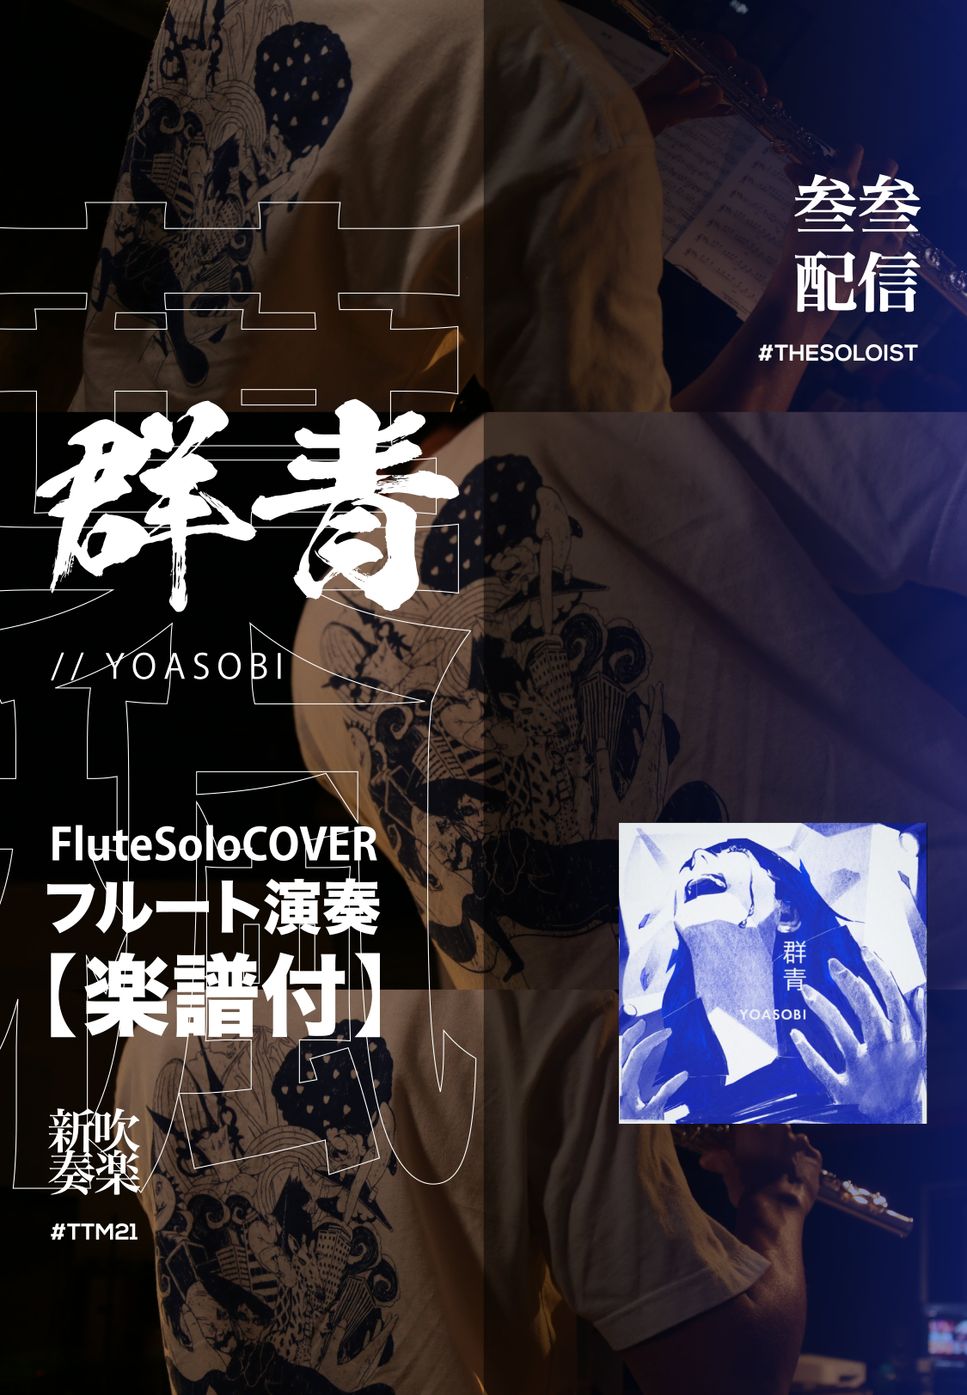 Ayase / Yoasobi - 群青/YOASOBI (フルート演奏) by FungYip